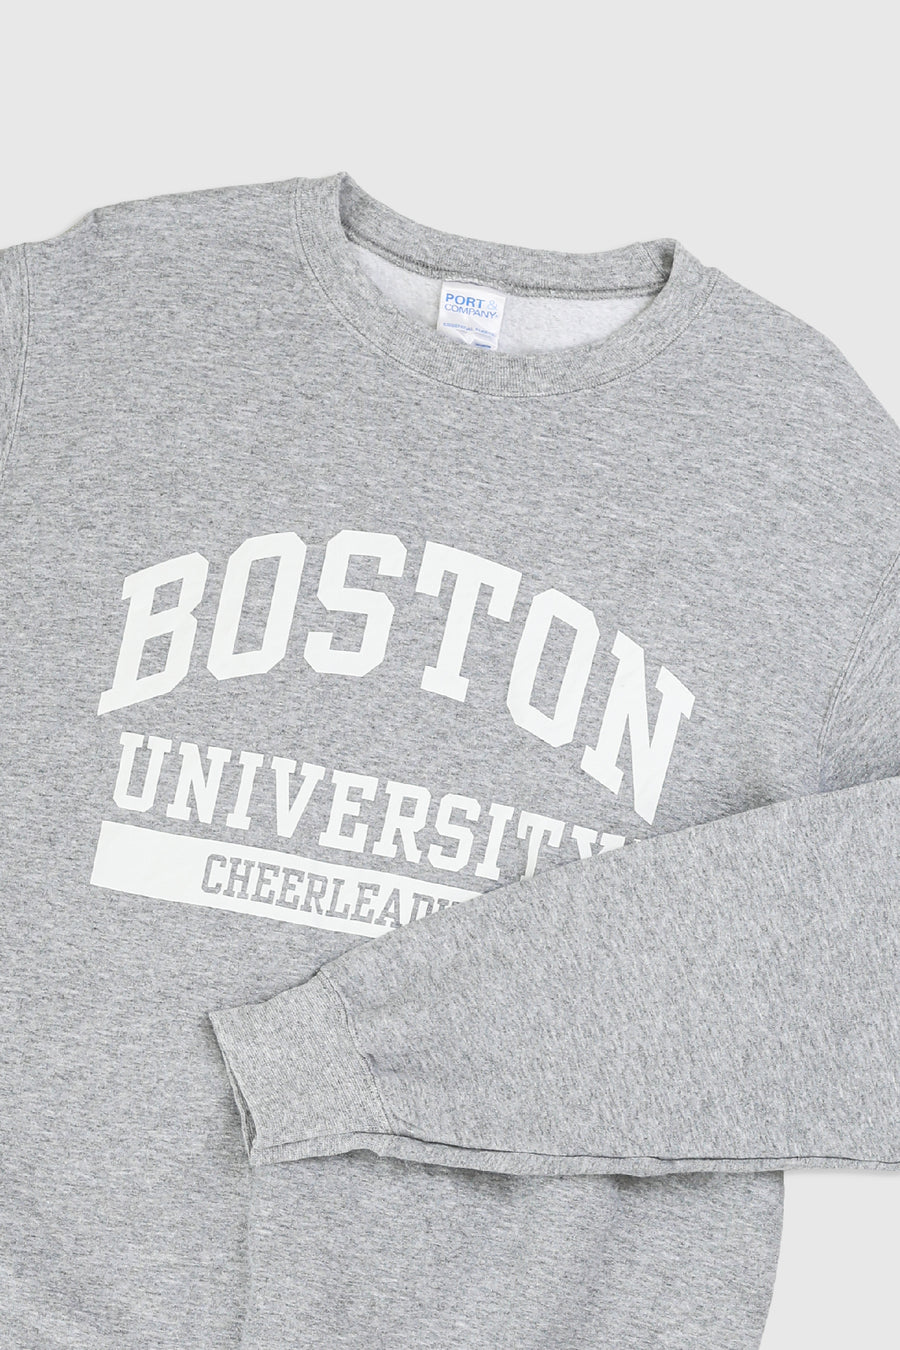 Vintage Boston University Sweatshirt